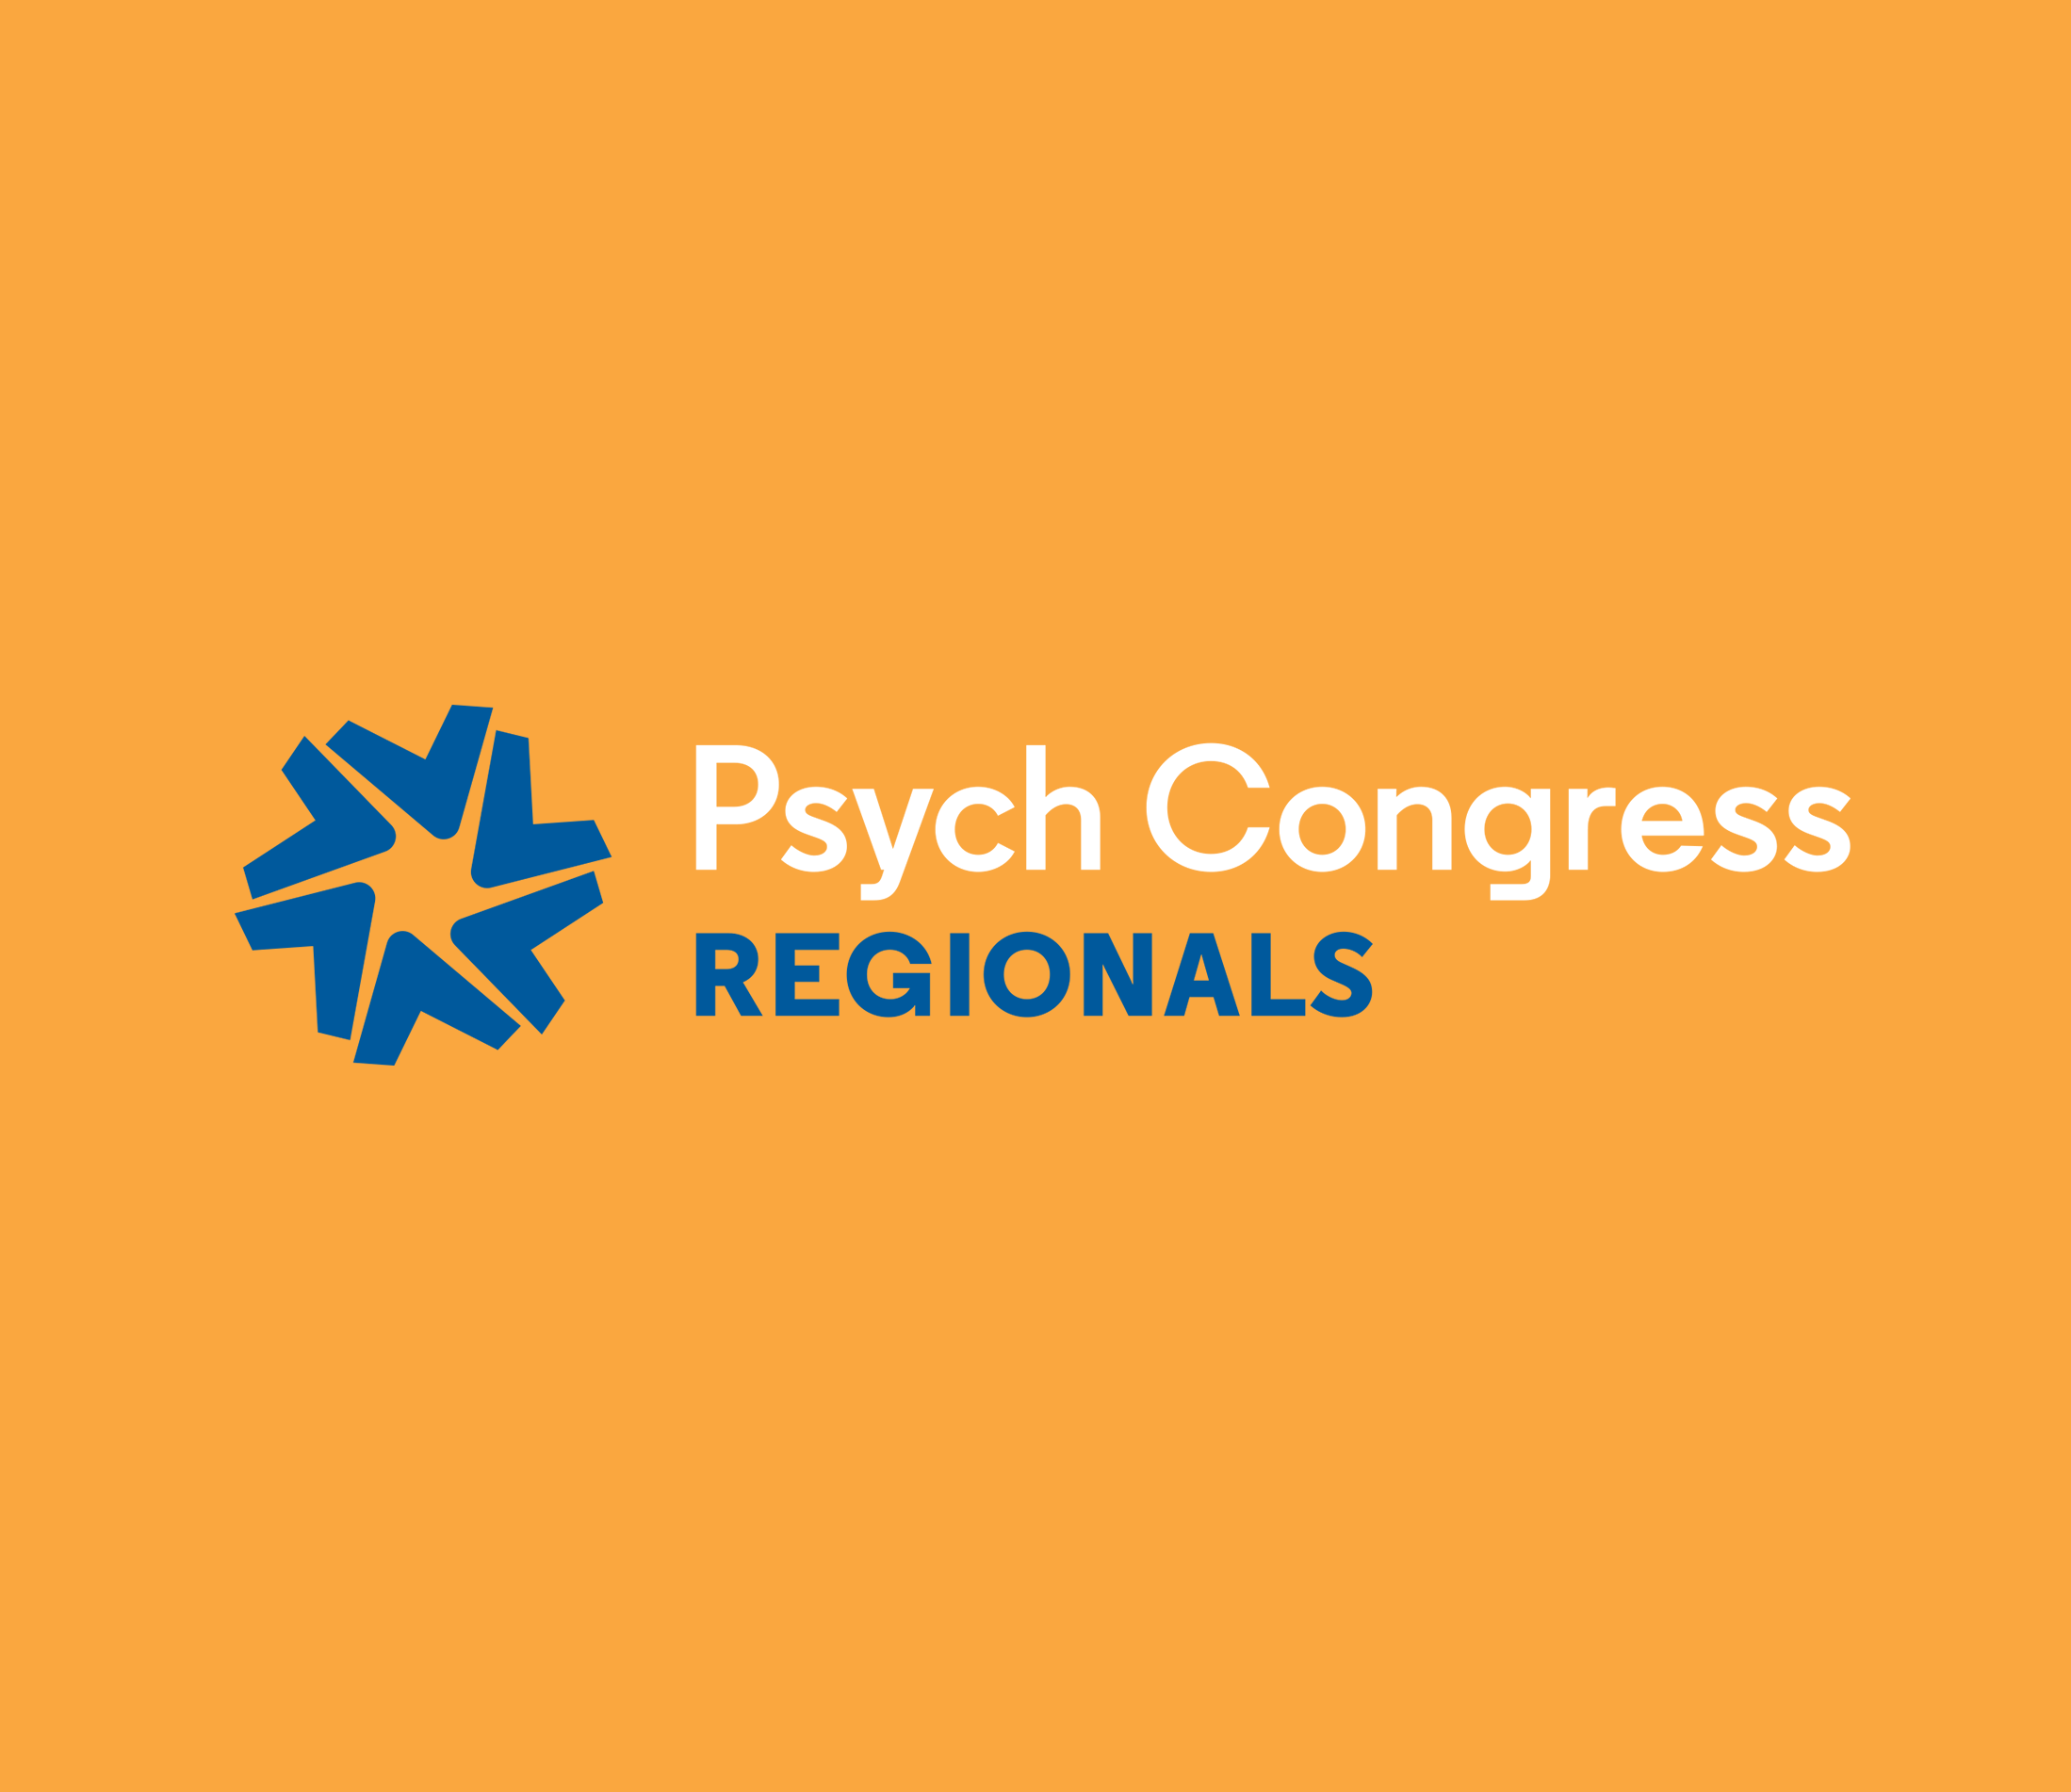 Psych Congress Regionals